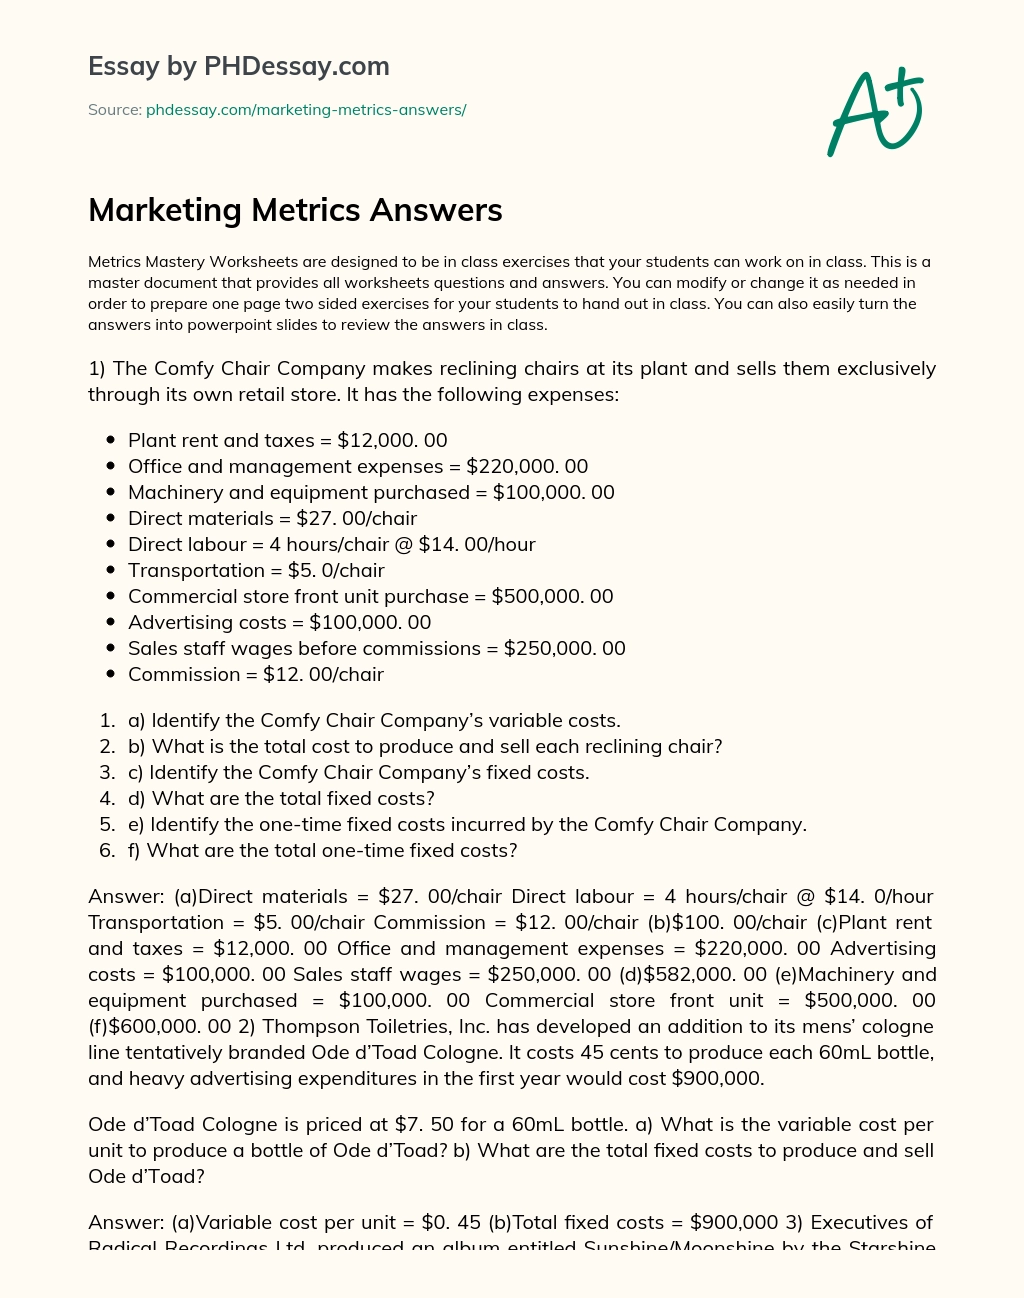 Marketing Metrics Answers essay